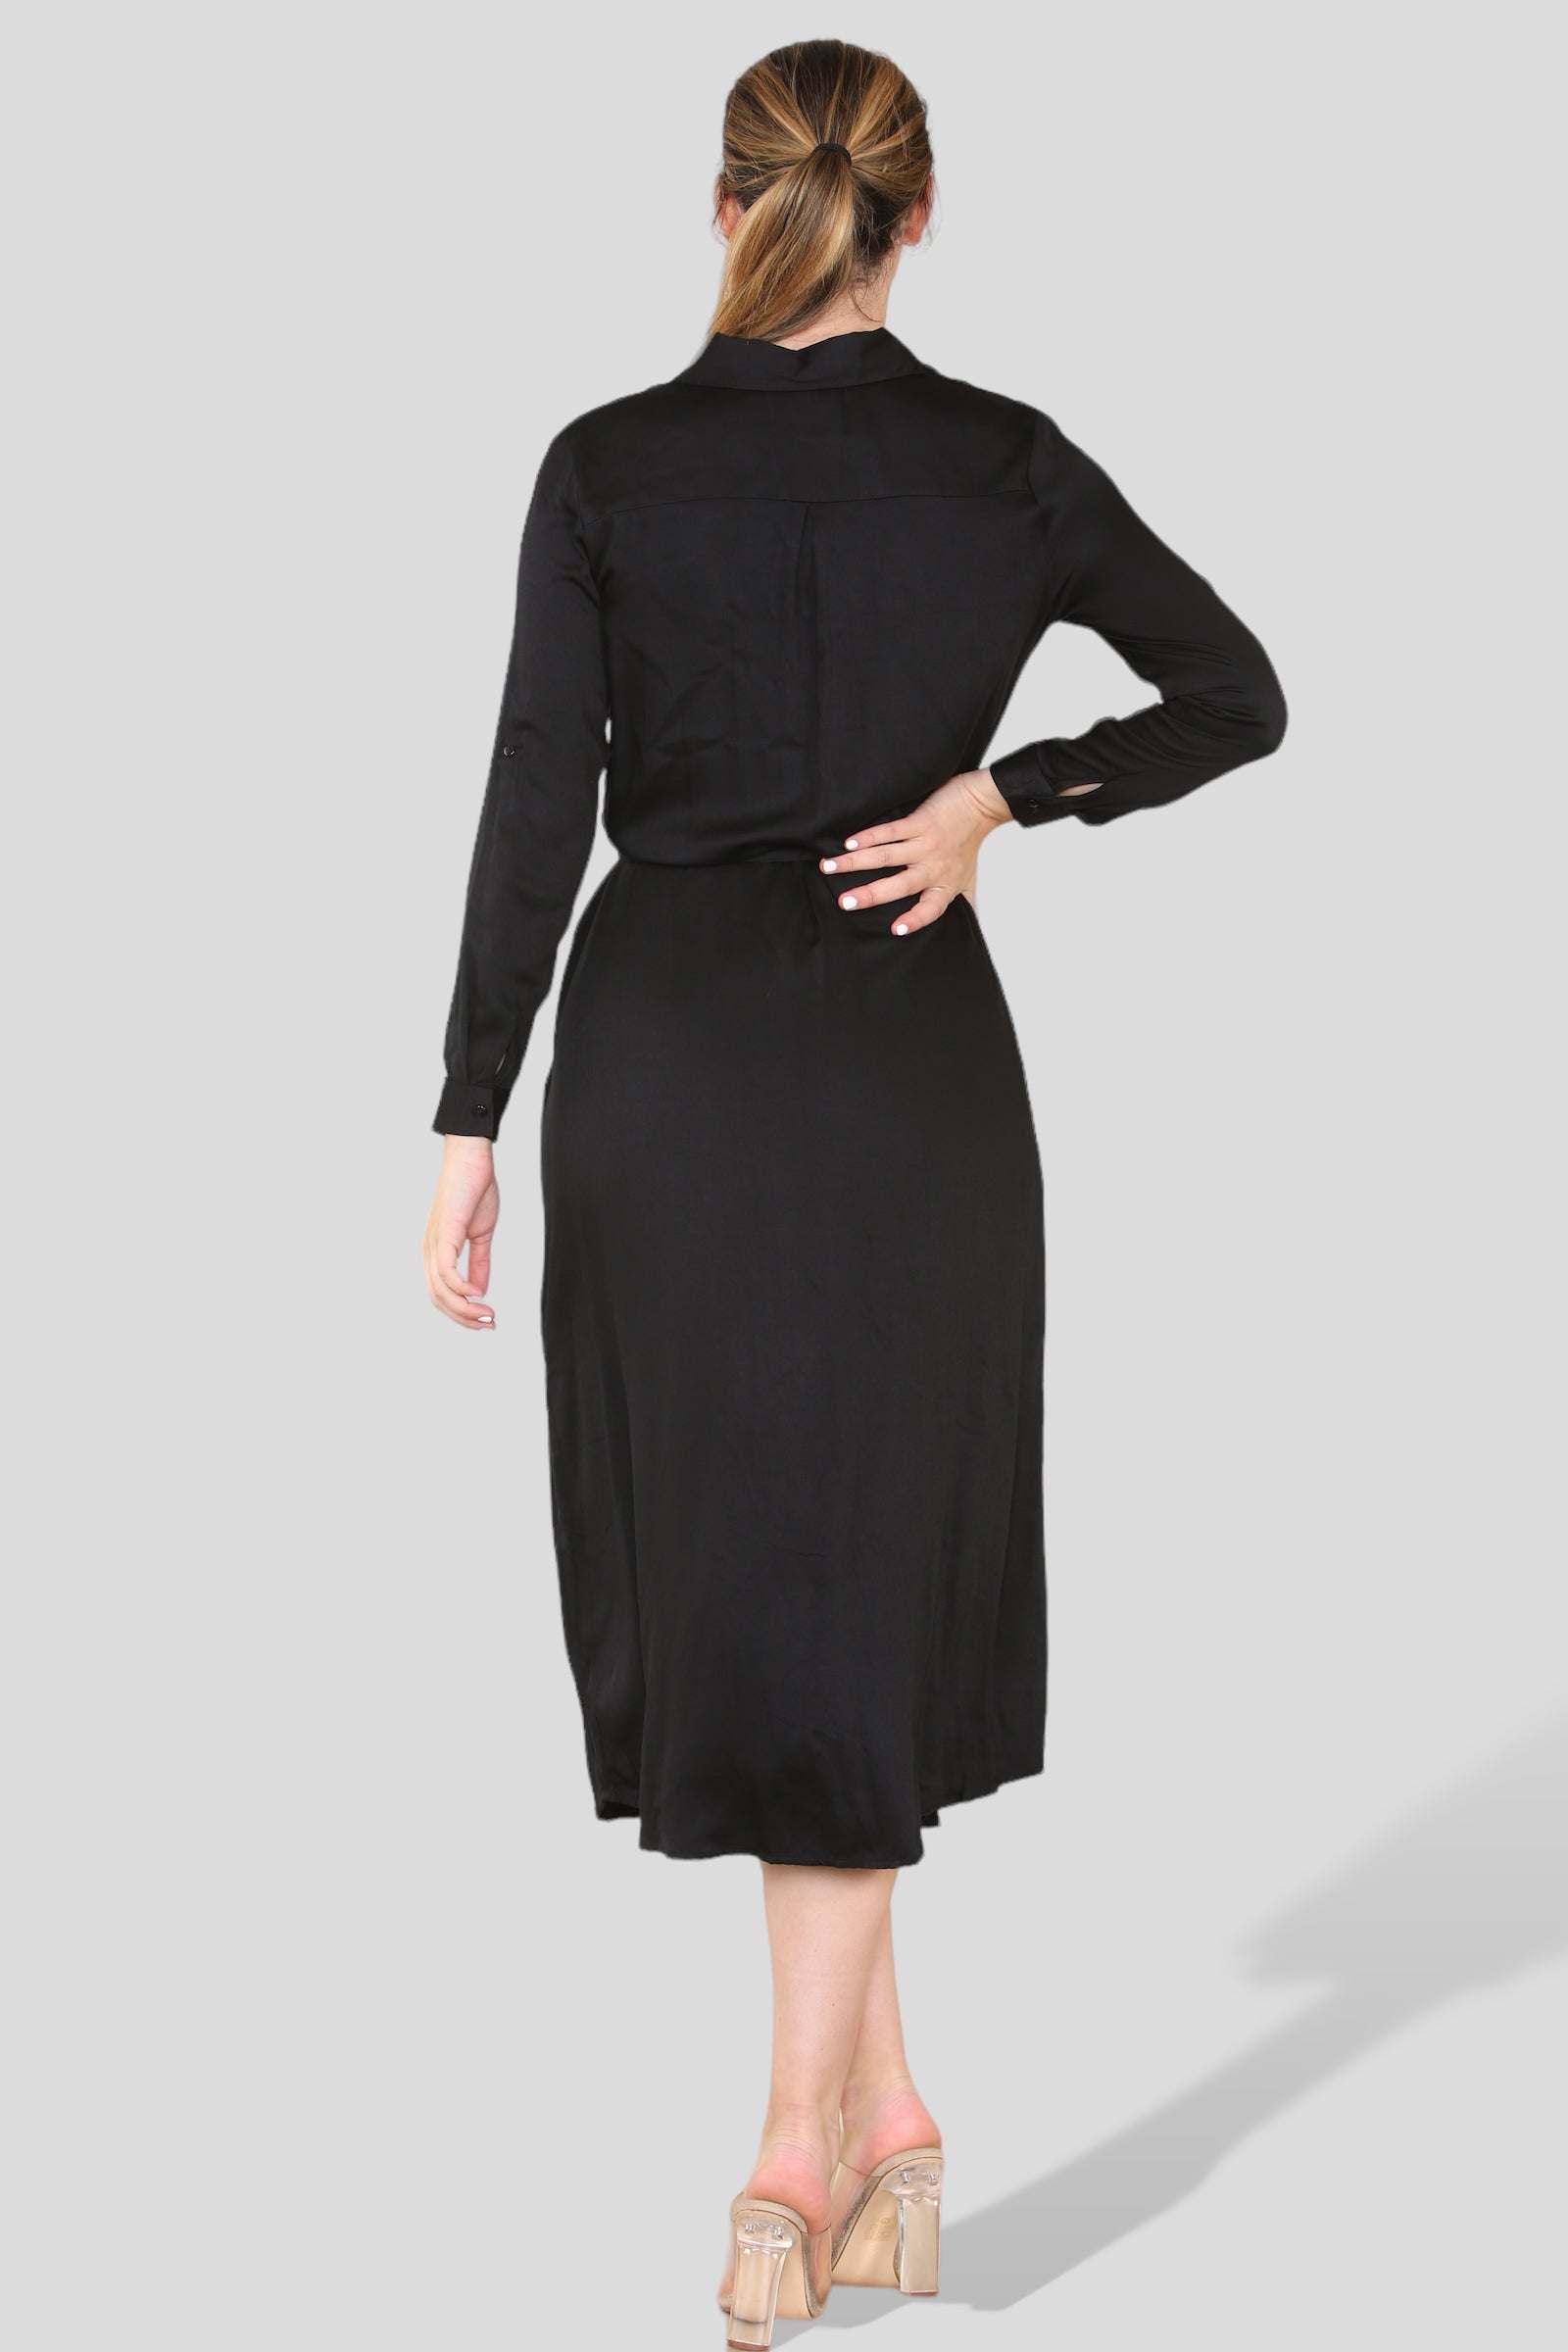 Love Sunshine Plain Black Long Sleeve Maxi Shirt Dress LS-2156LL